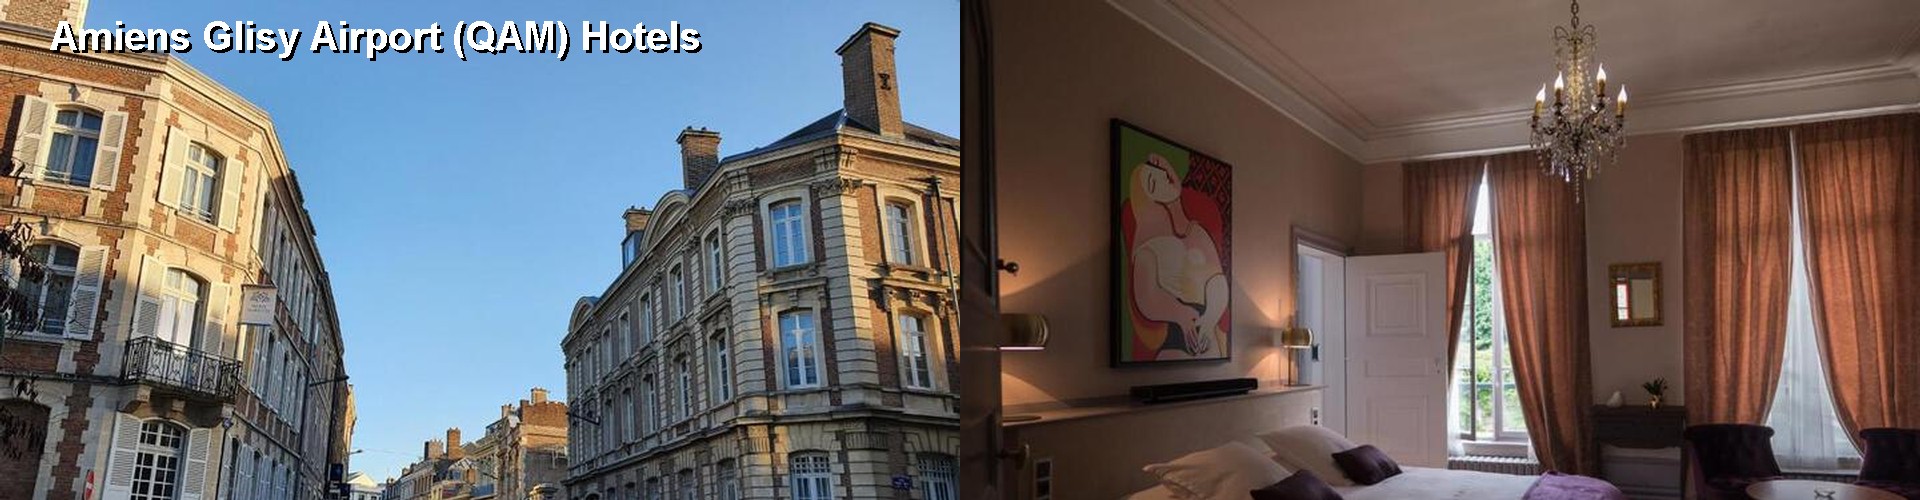 5 Best Hotels near Amiens Glisy Airport (QAM)